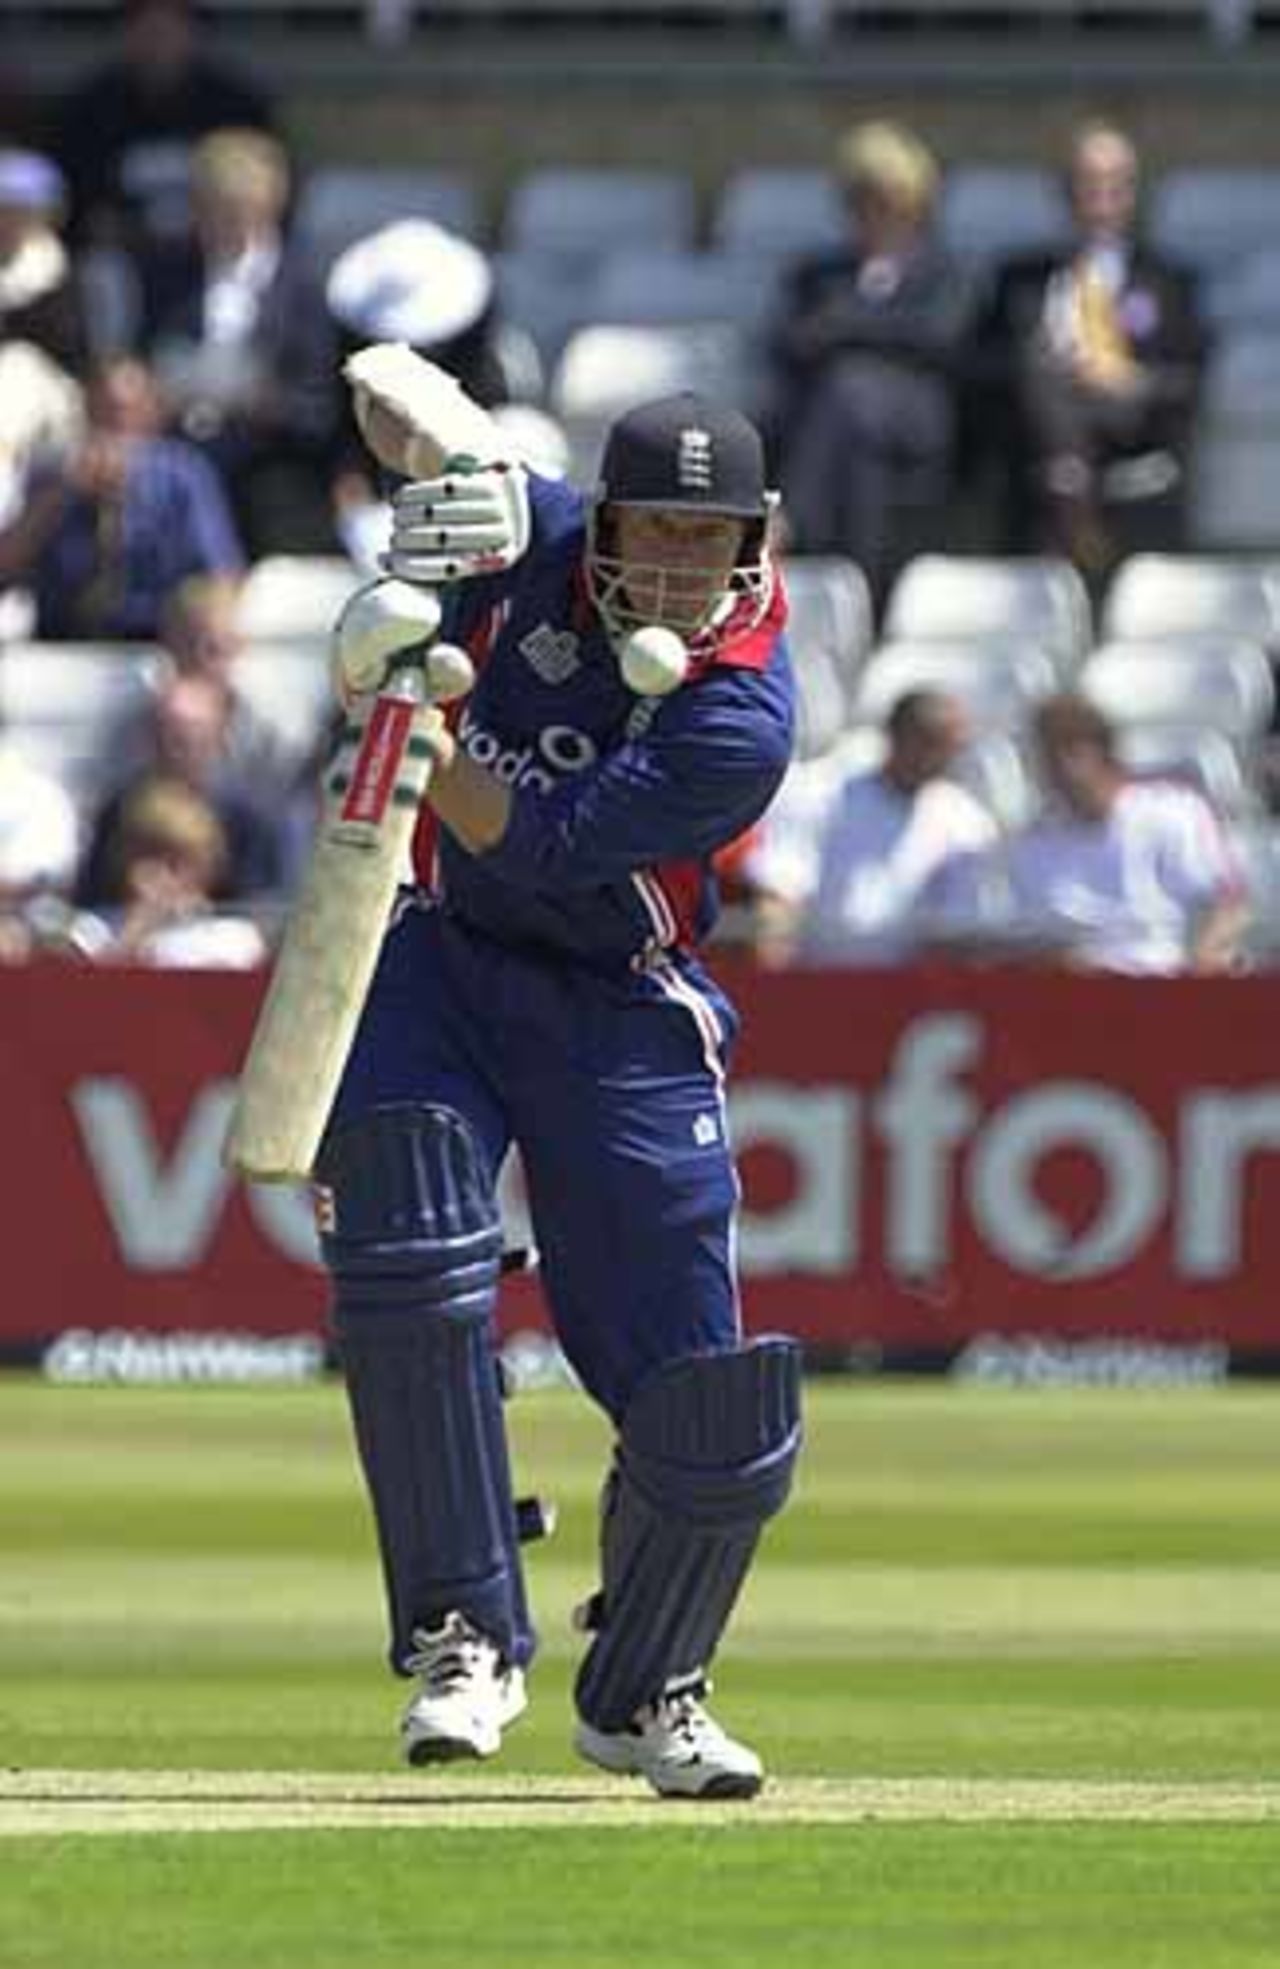 Nick Knight firmly in line in his innings of 20, England v Sri Lanka at Trent Bridge